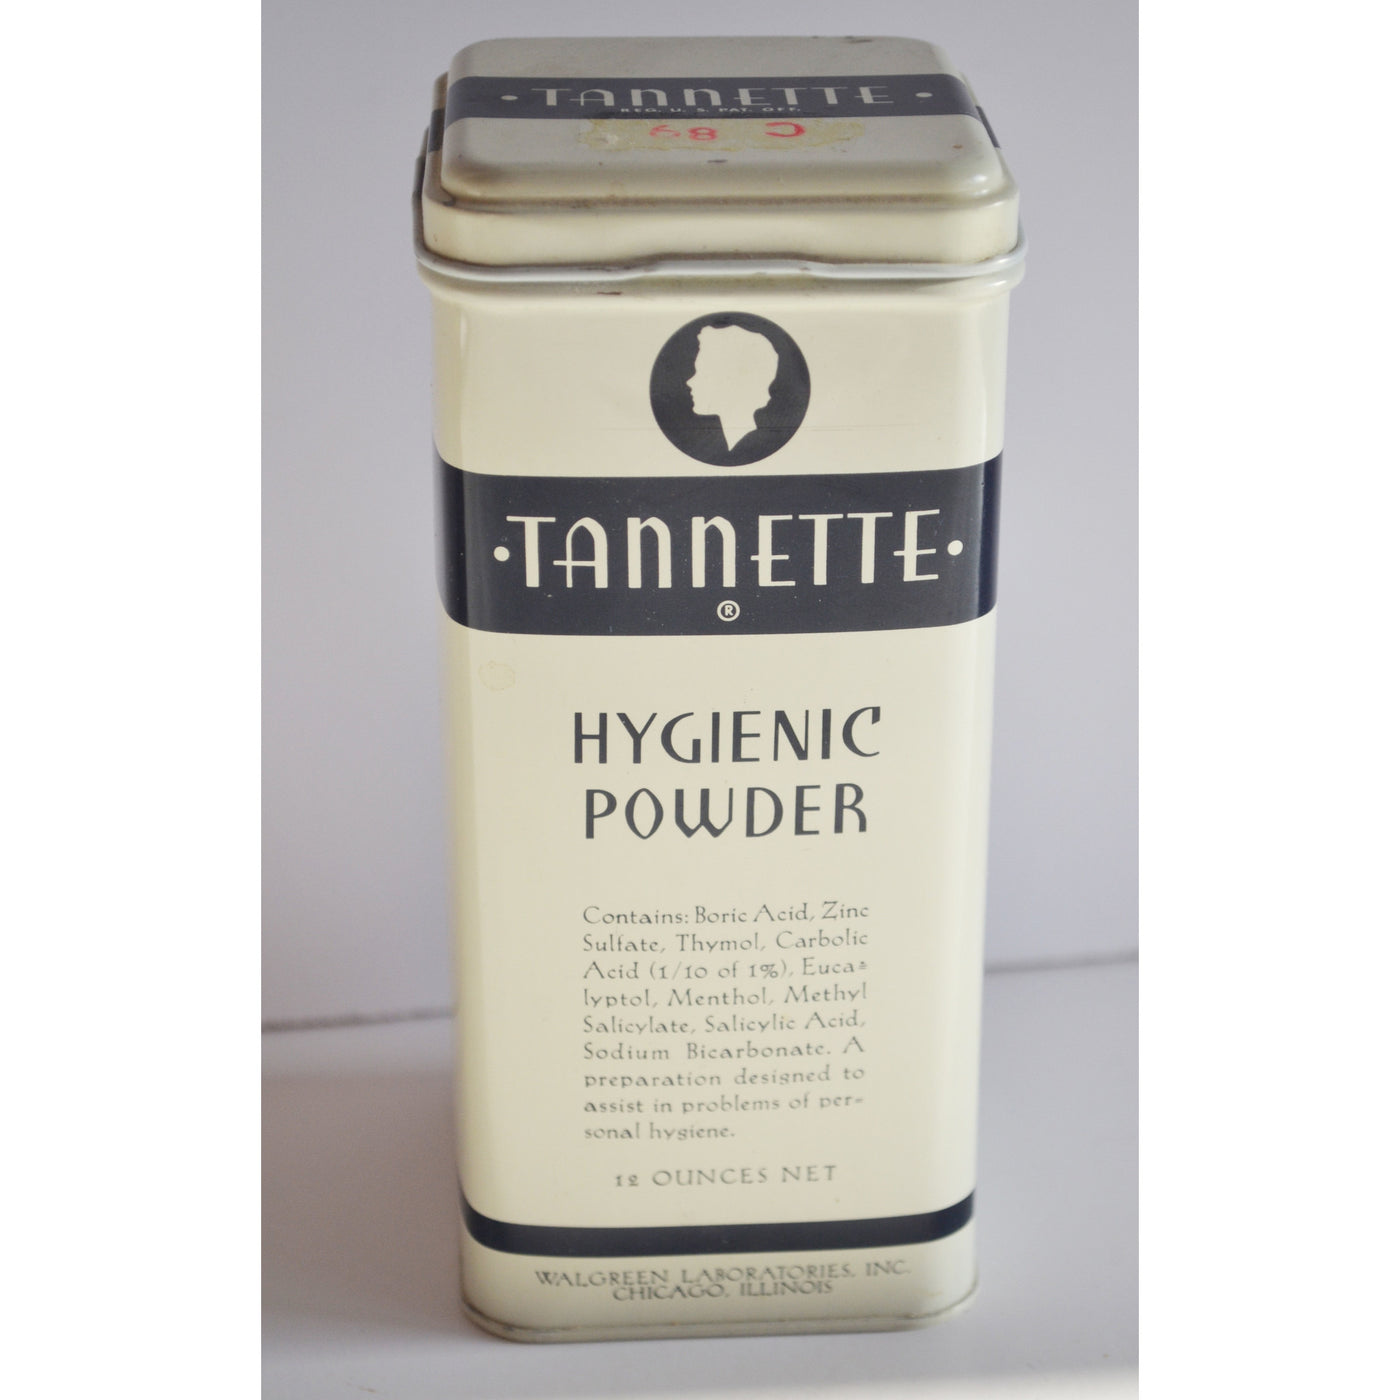 Vintage Tannette Hygenic Powder By Walgreens 